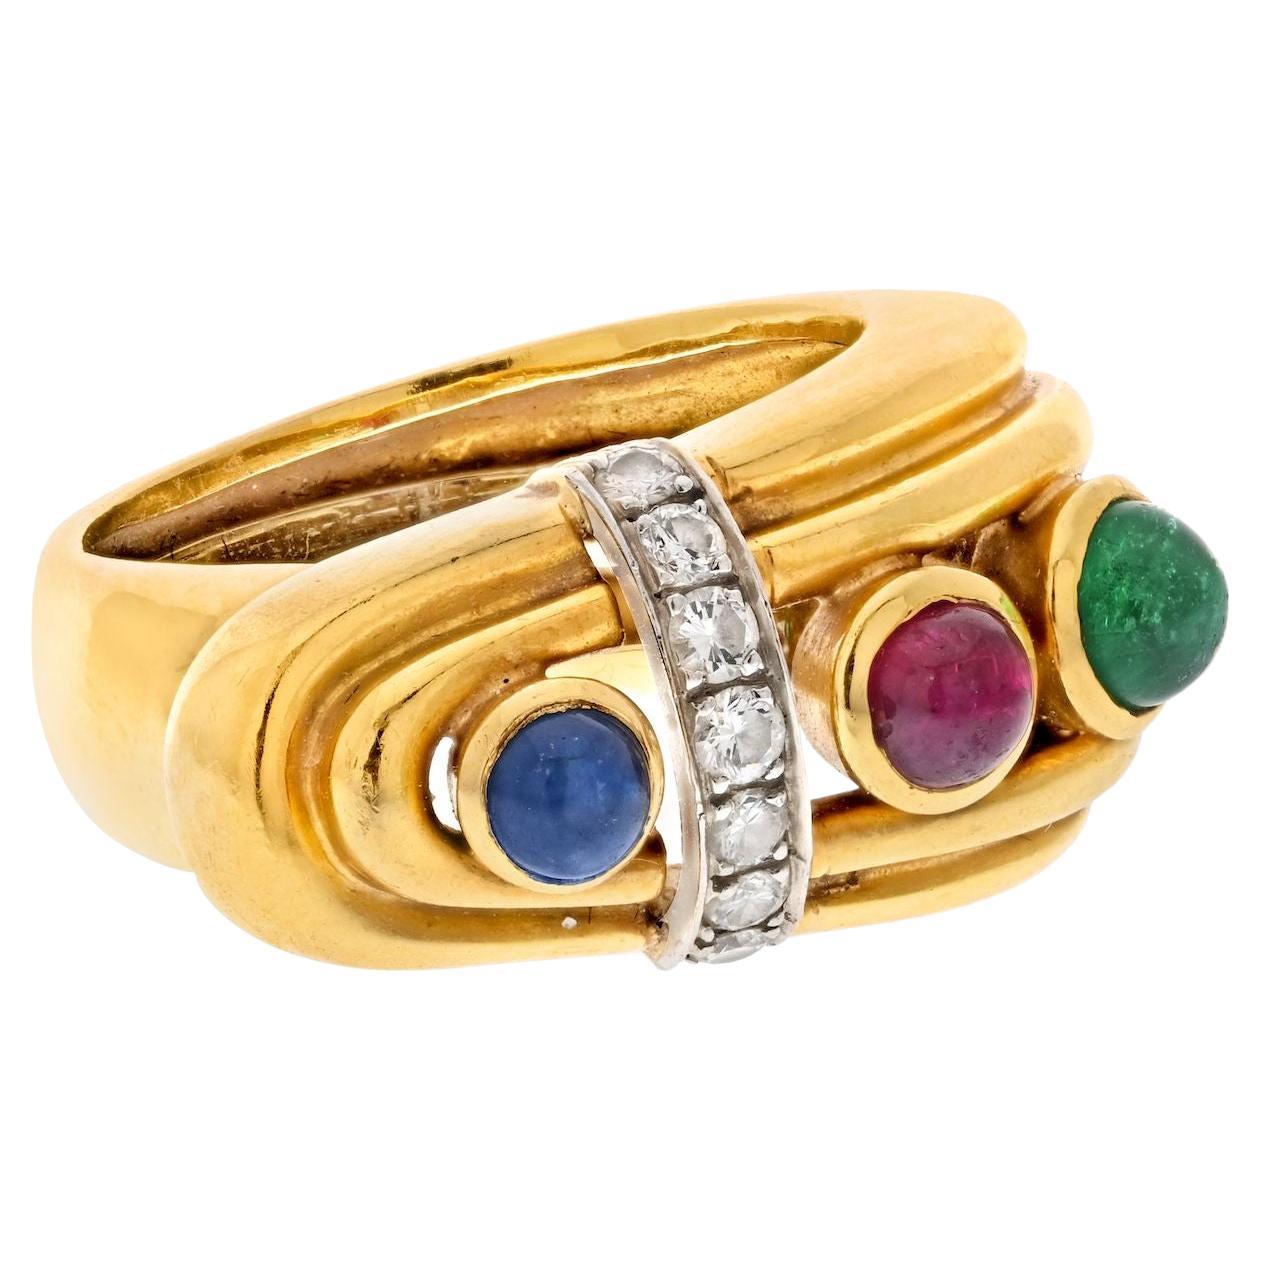 David Webb 18K Yellow Gold Diamond, Sapphire, Ruby And Emerald Buckle Ring